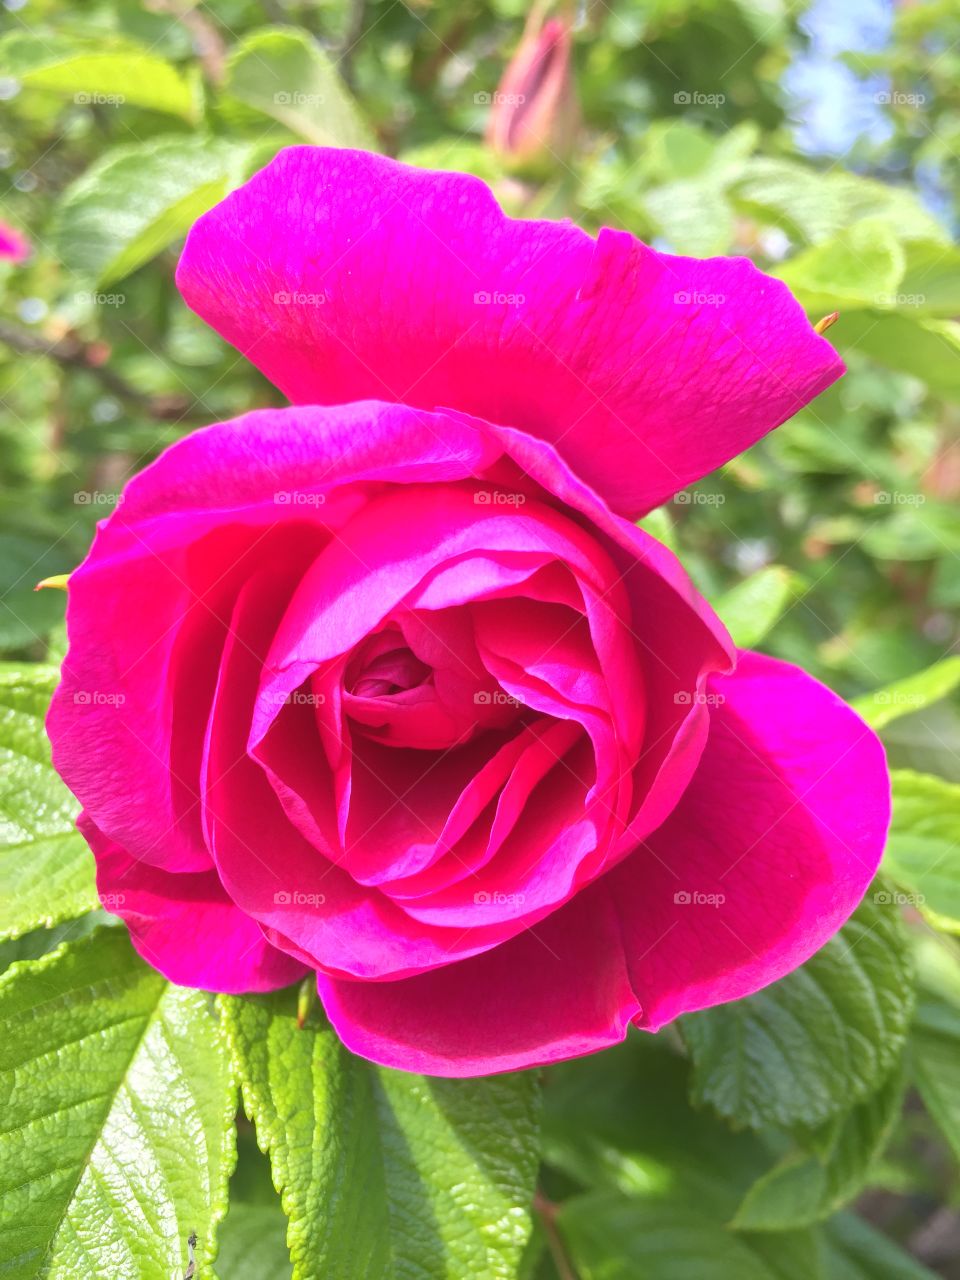 Rose One